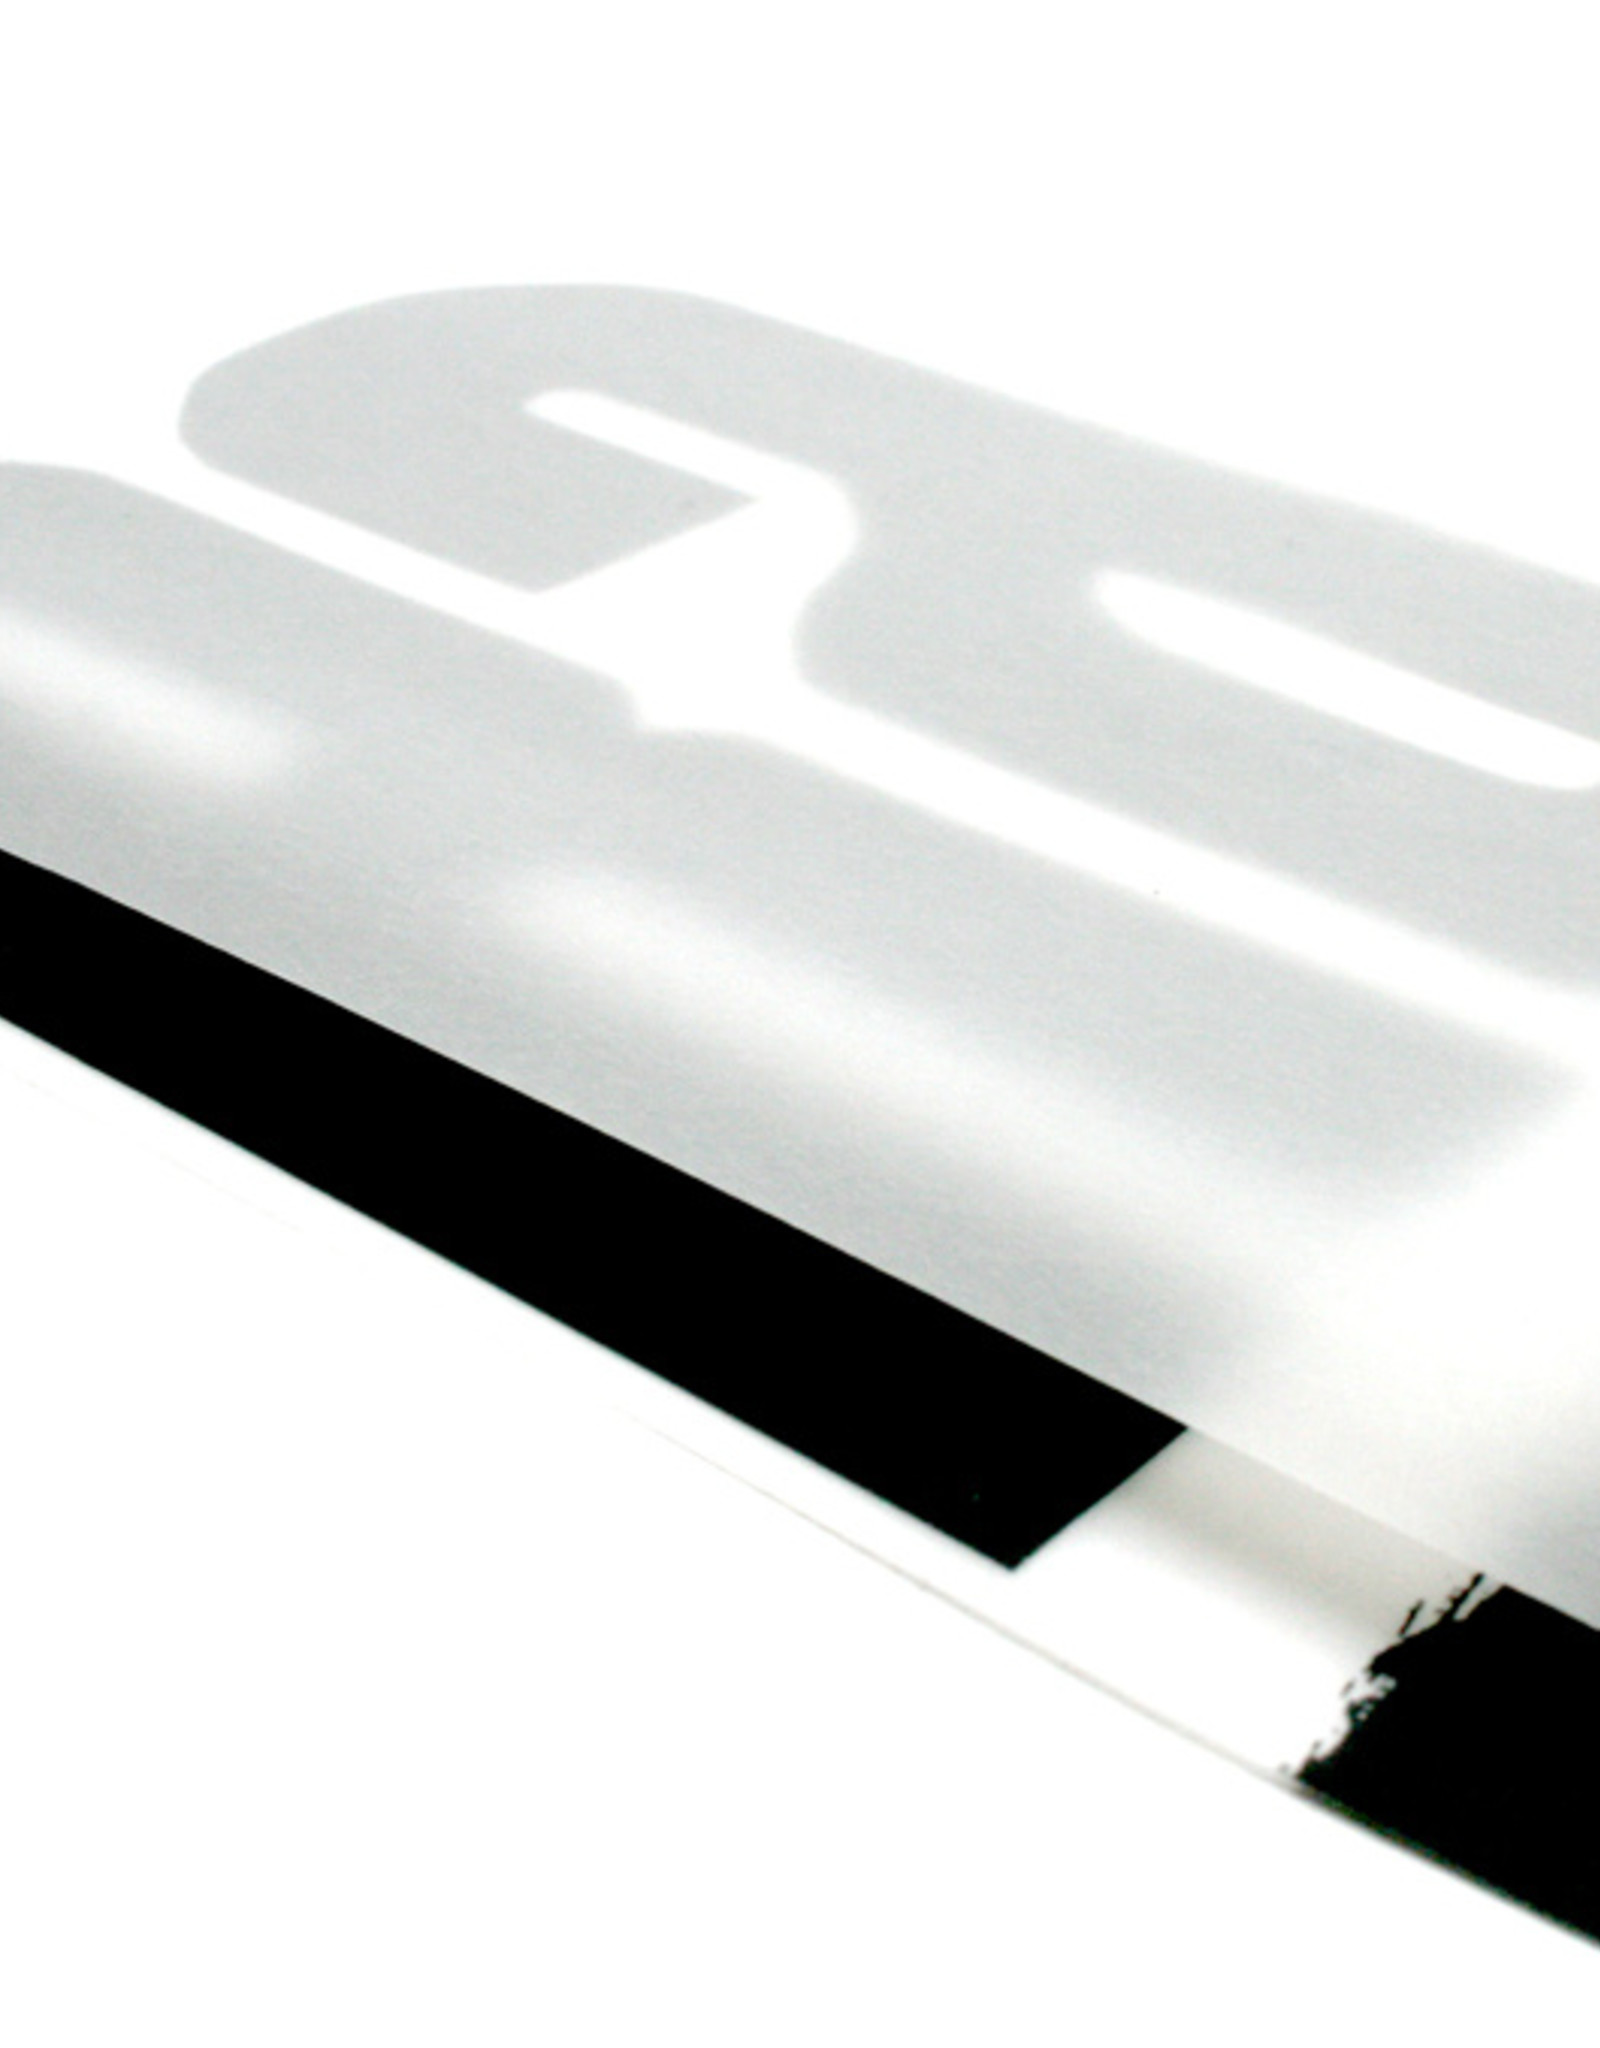 Transparant-papier-kalkpapier-90-95-gsm-82cmx59,4cm-A1 KunstLokaal